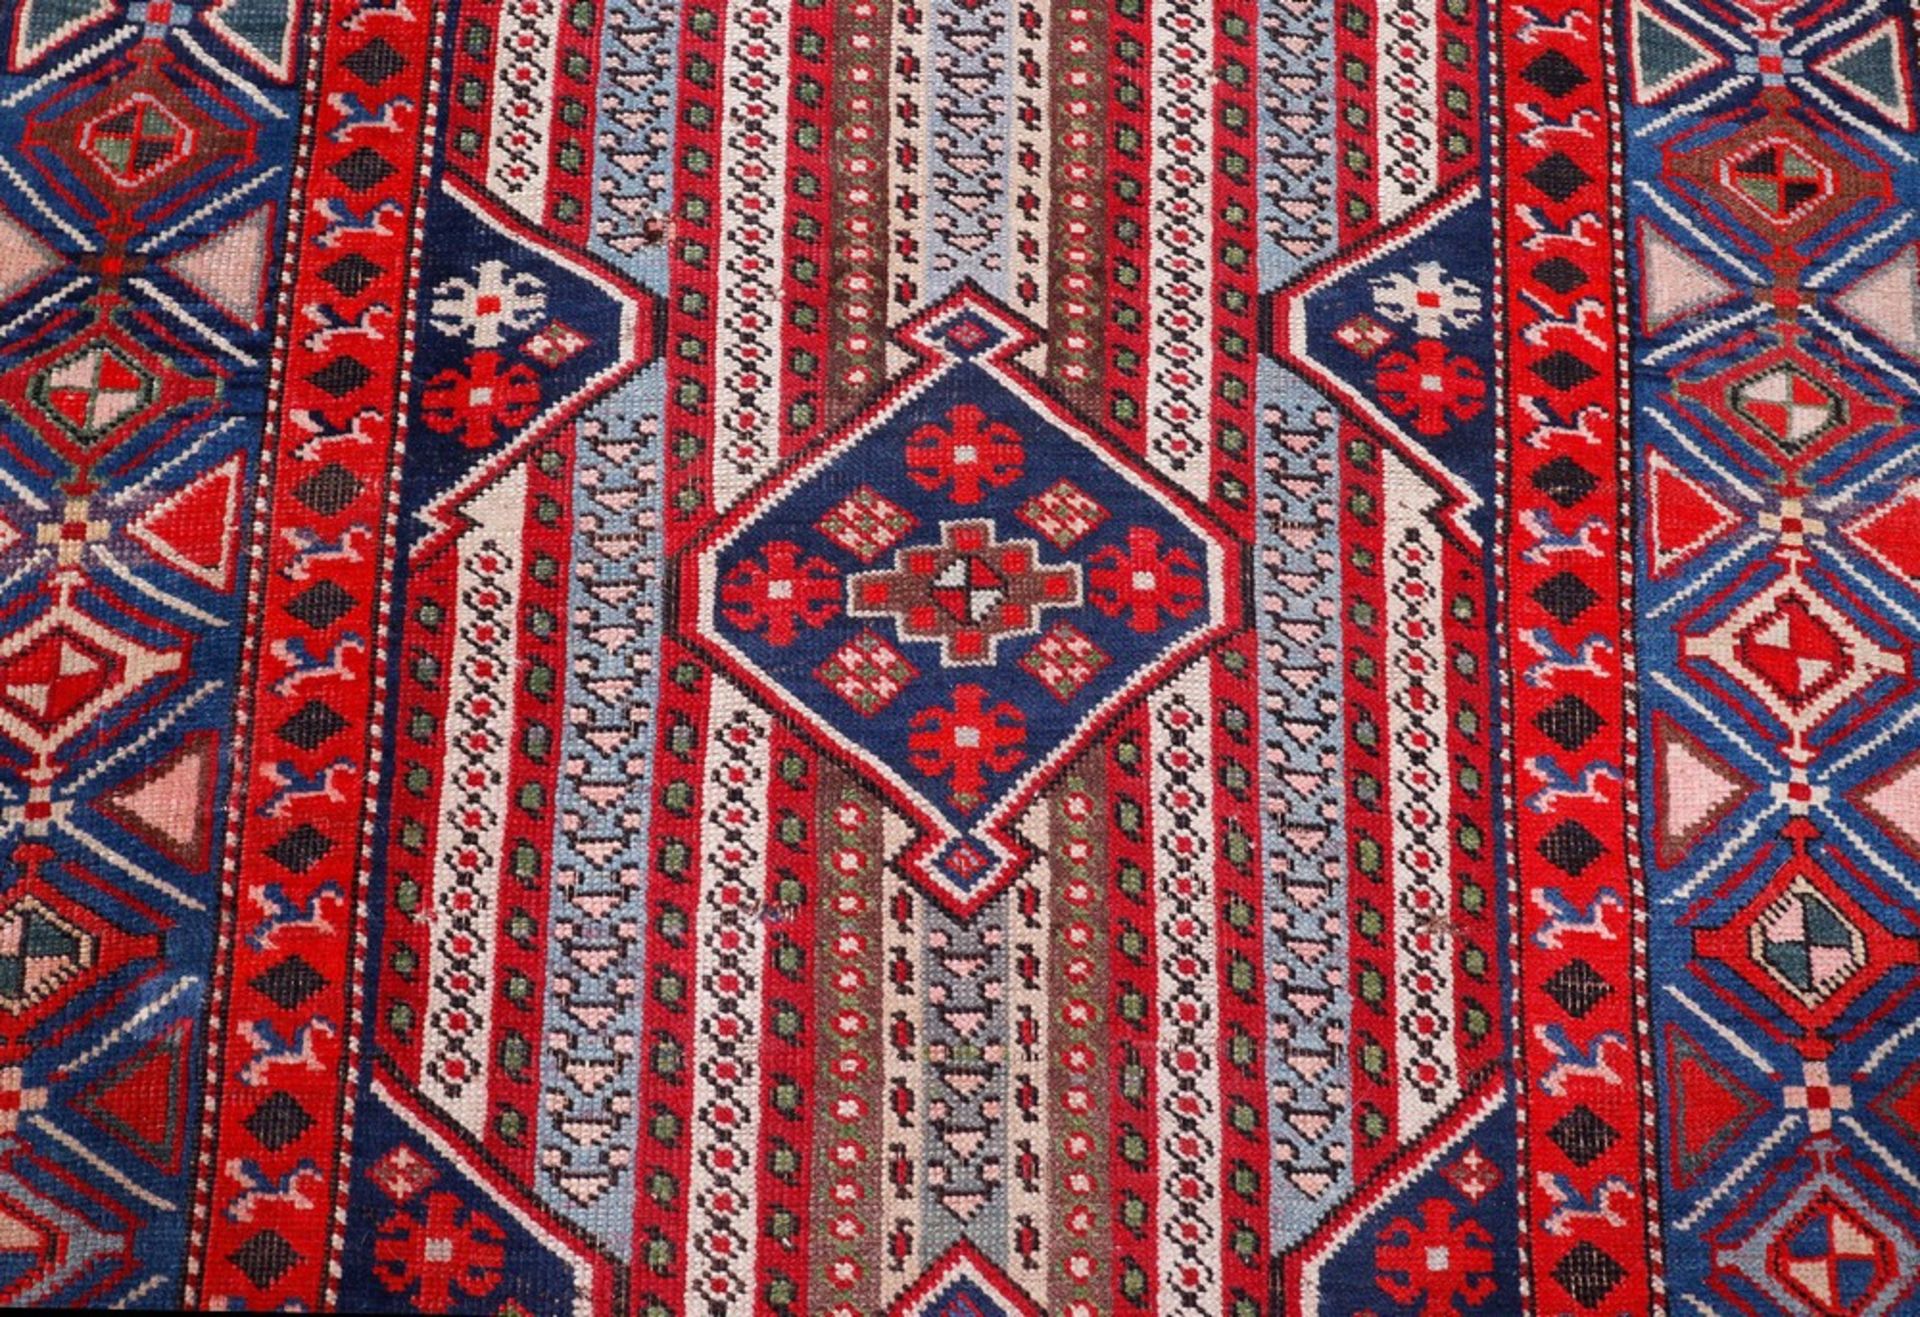 Carpet, Kuba-Shirvan, Caucasus, c. 60 years old - Image 2 of 4